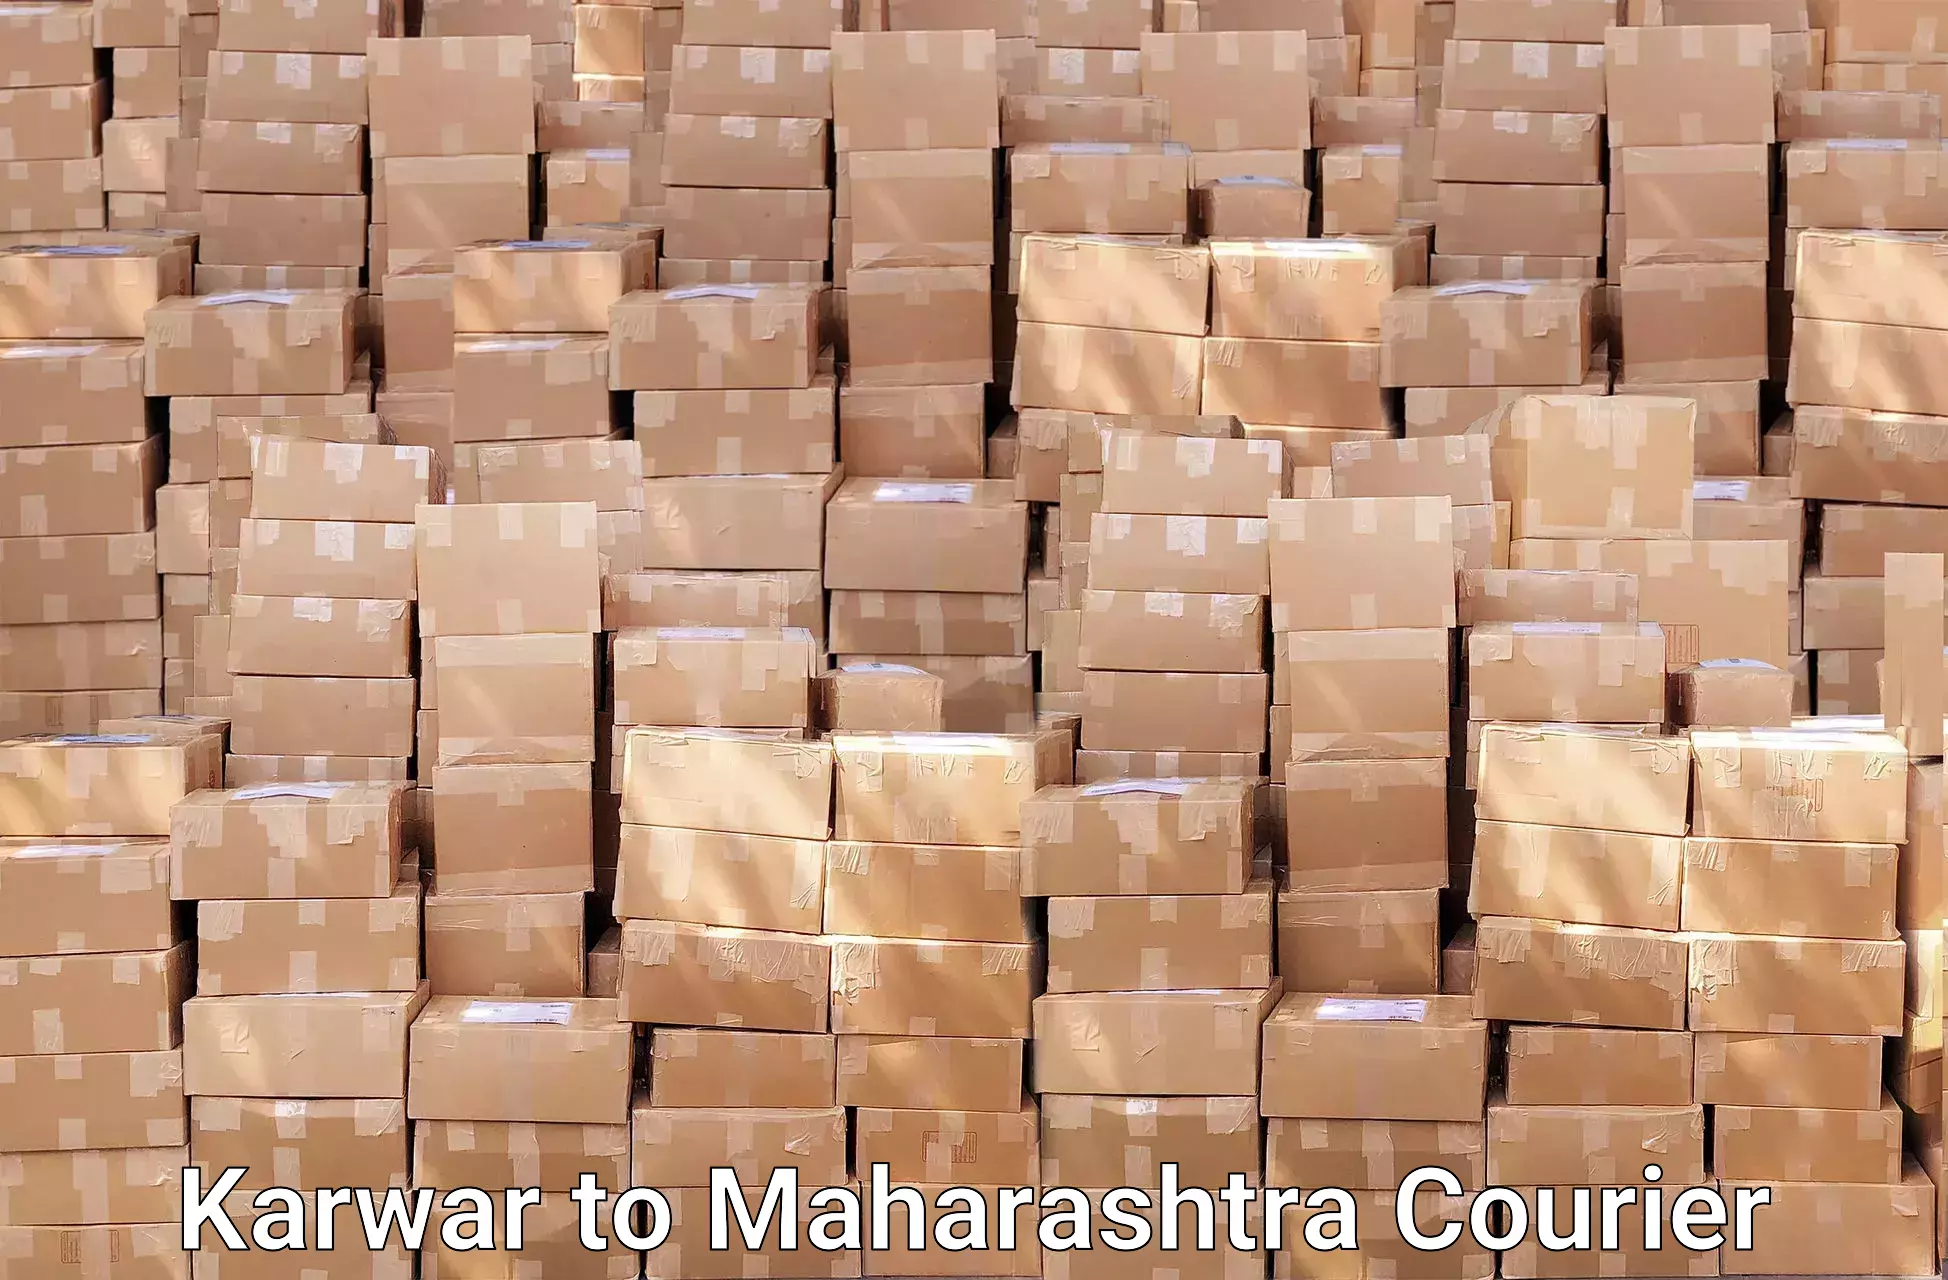 Professional moving assistance Karwar to Maharashtra